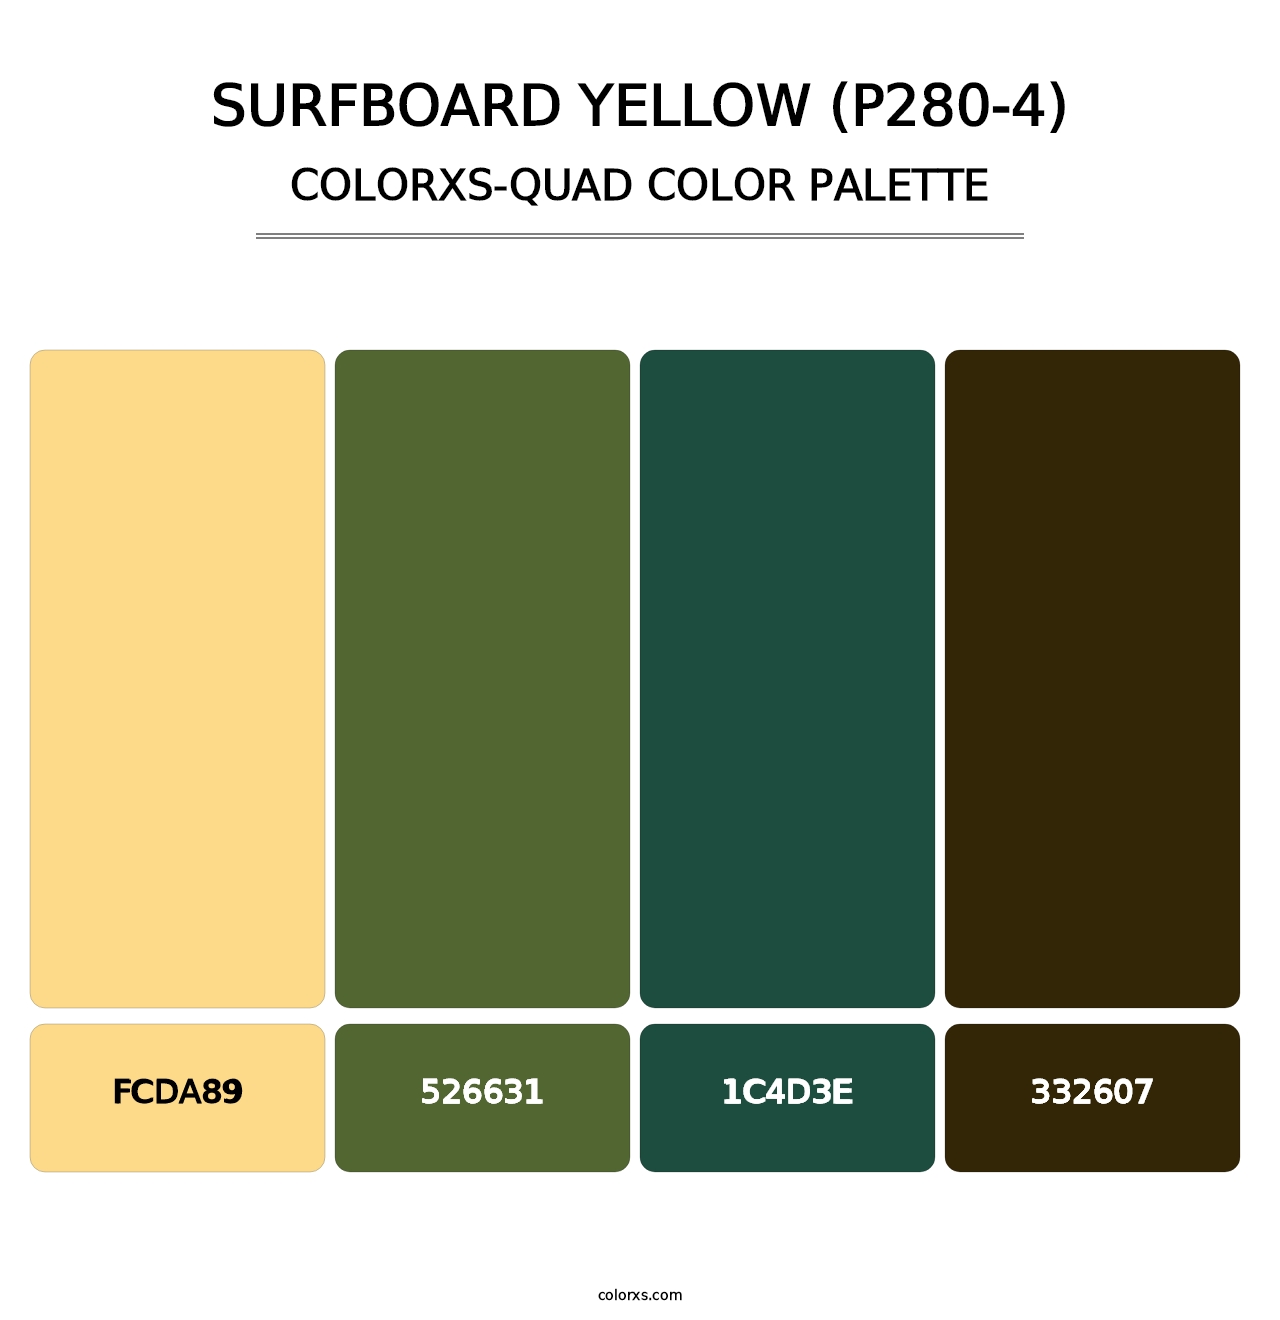 Surfboard Yellow (P280-4) - Colorxs Quad Palette